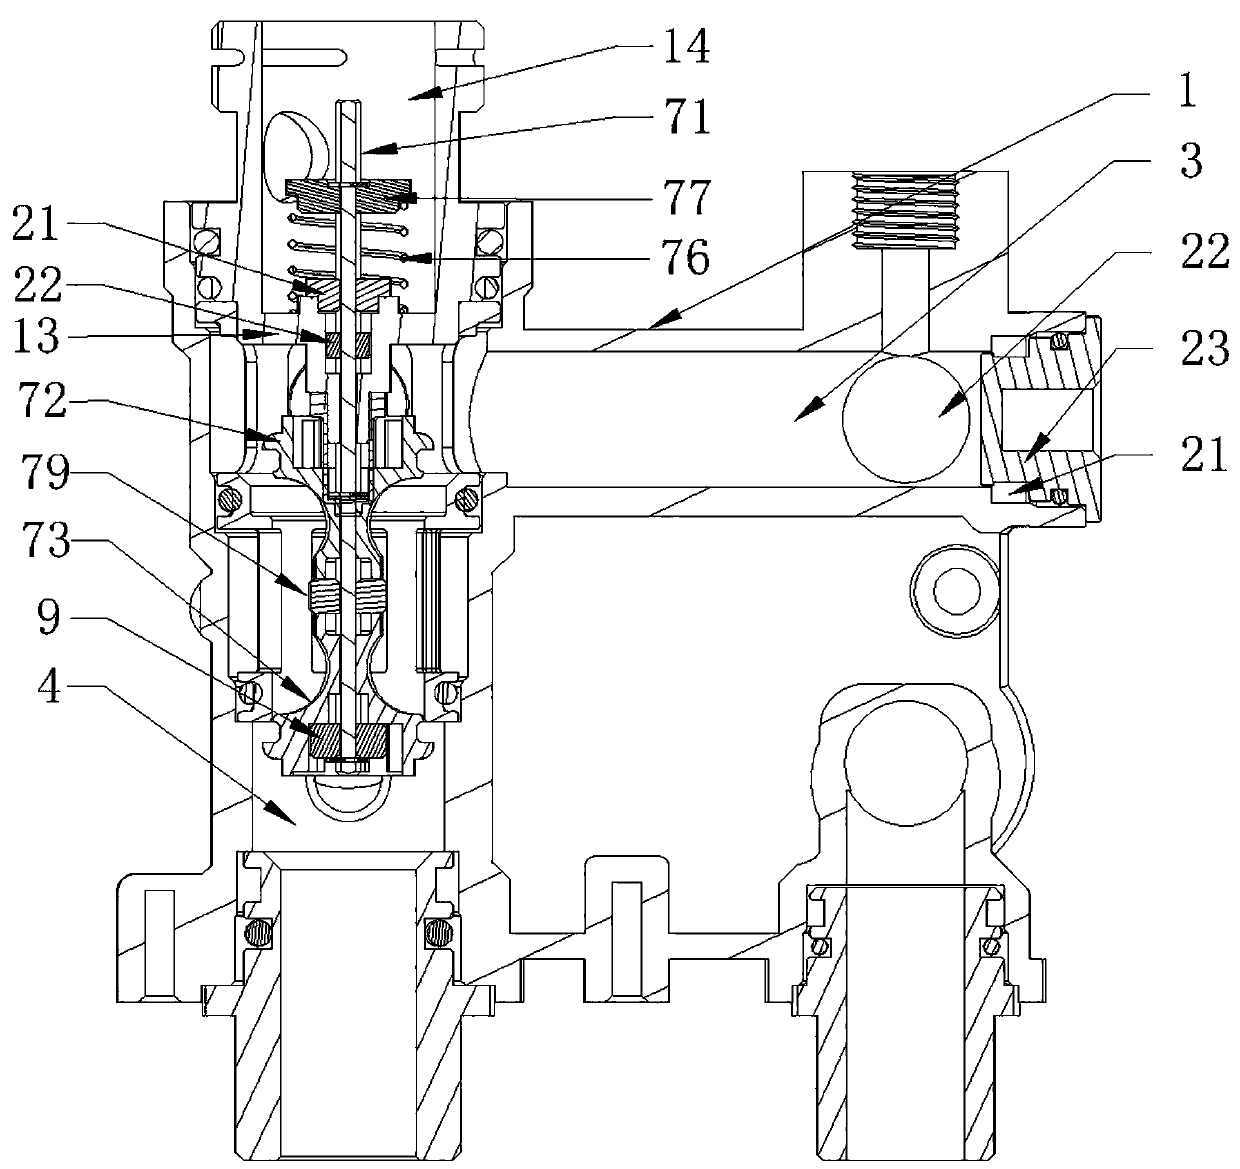 Three-way valve structure